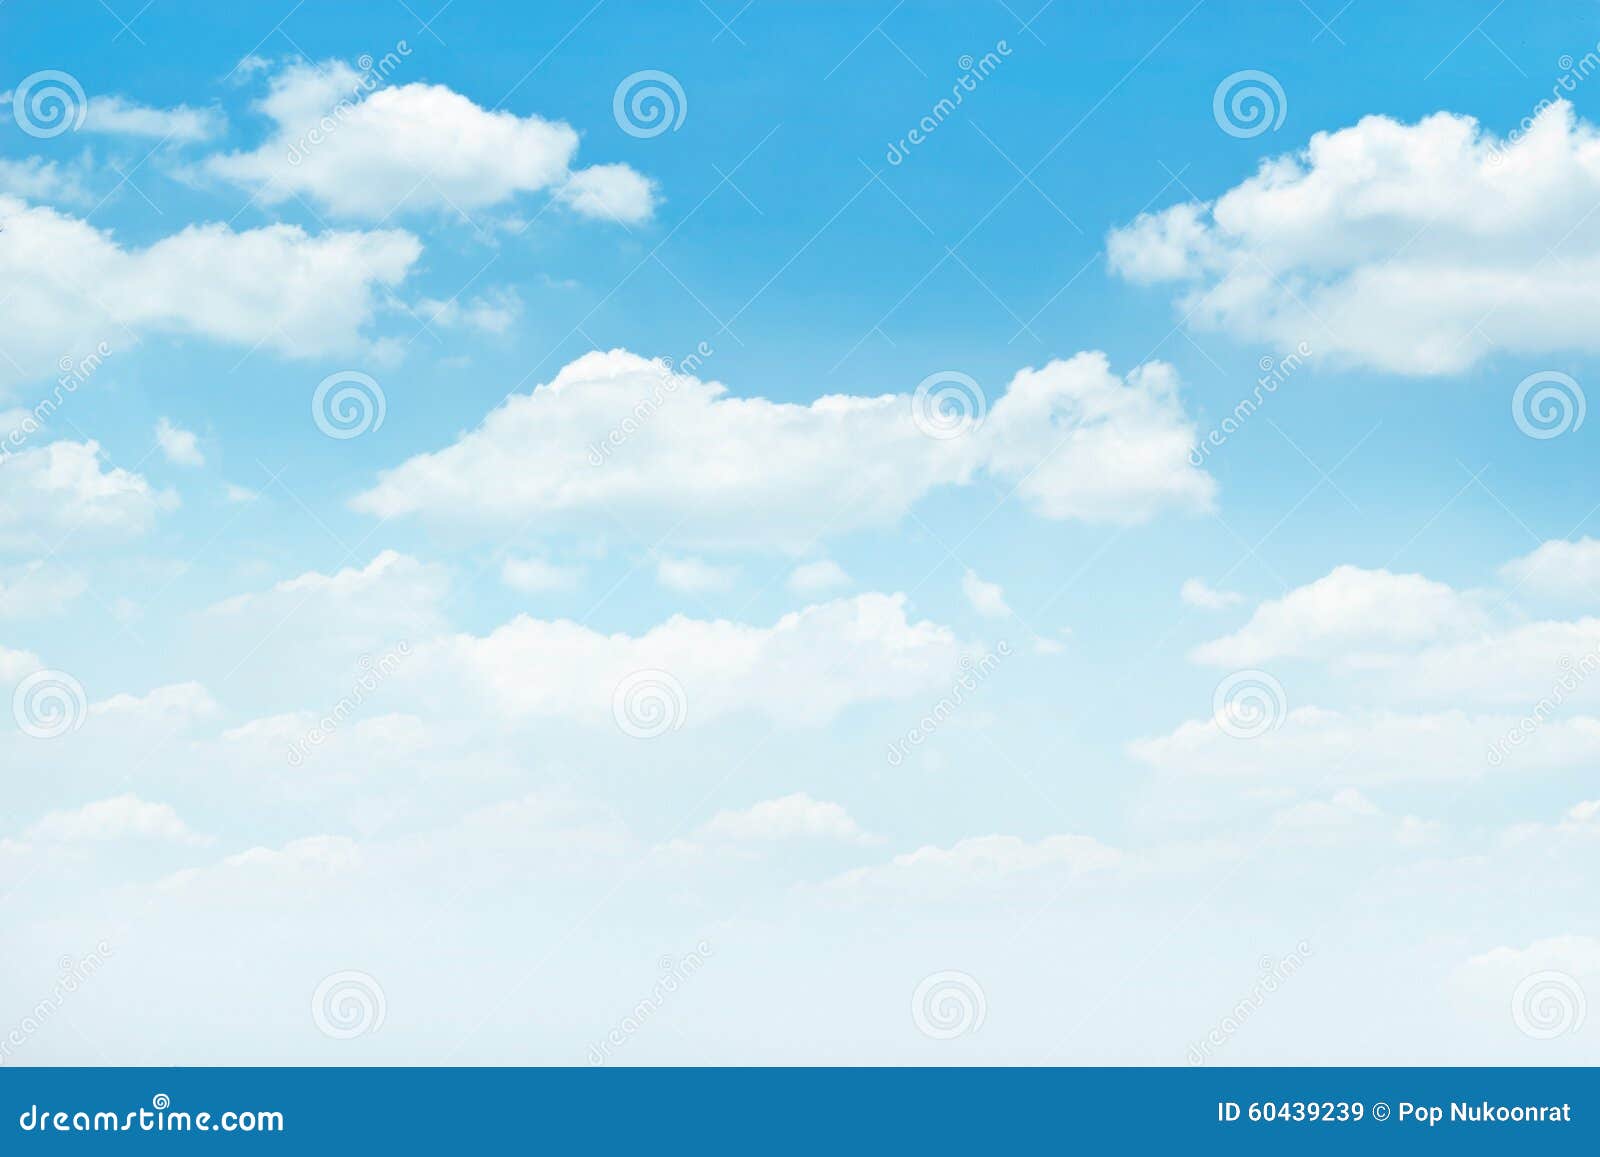 Blauwe hemel met witte wolkenachtergrond